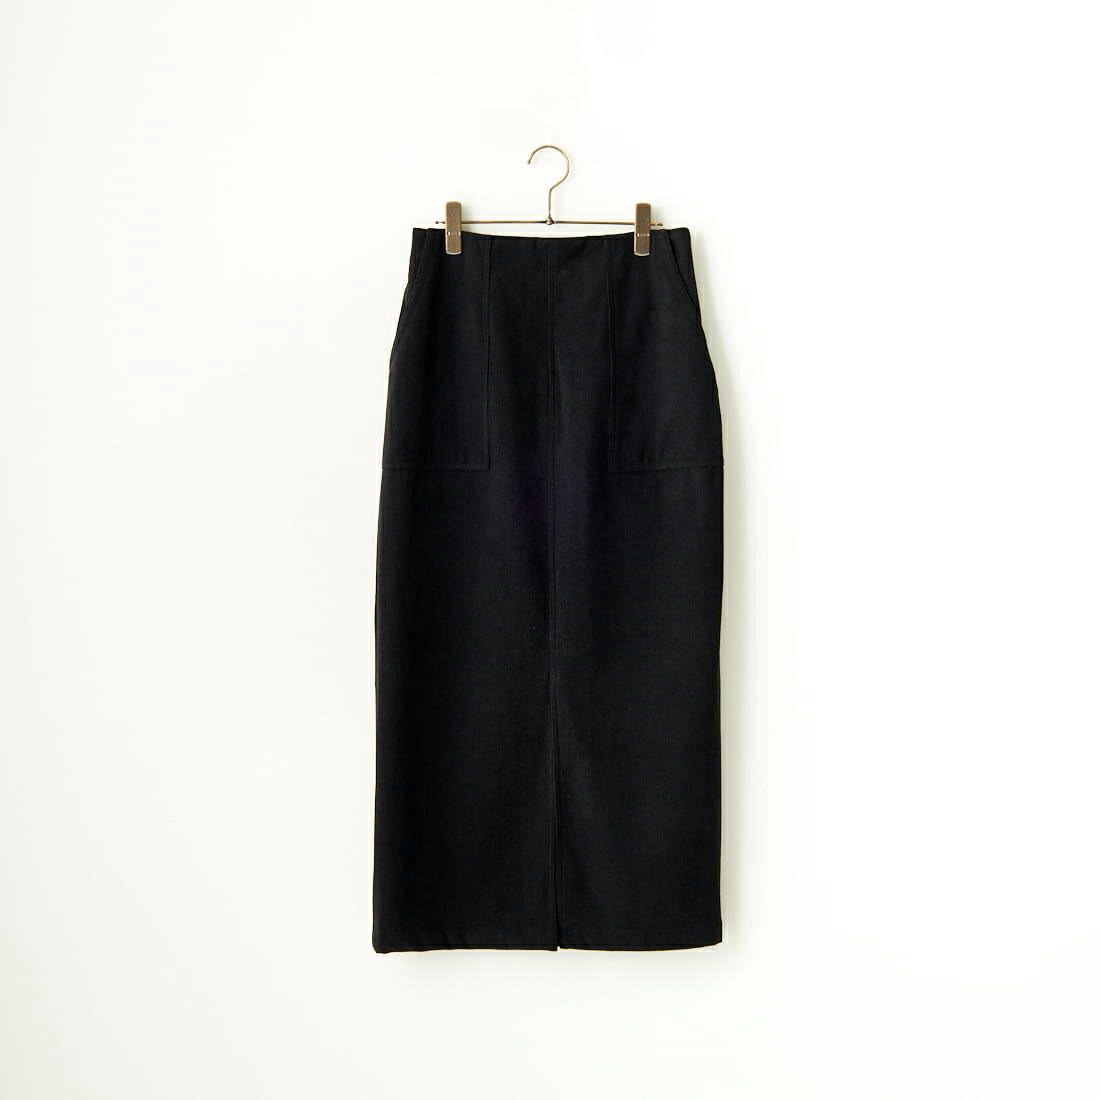 Jeans Factory Clothes [ジーンズファクトリークローズ] コーデュロイベイカースカート [IWJF-02] BLACK